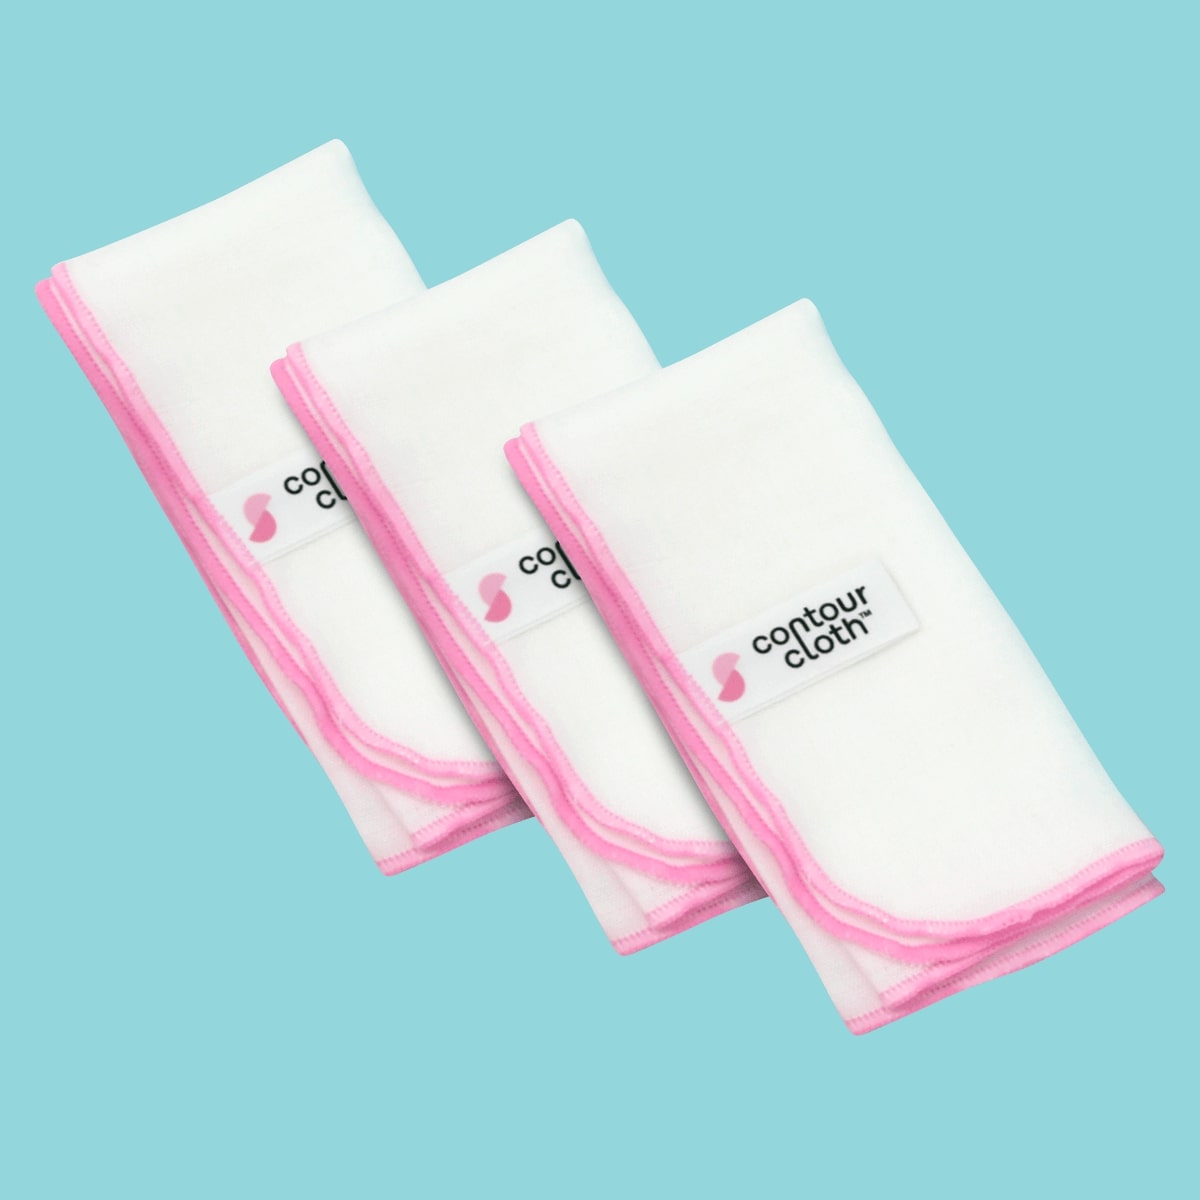 Pink Contour Cube&reg; Starter Pack